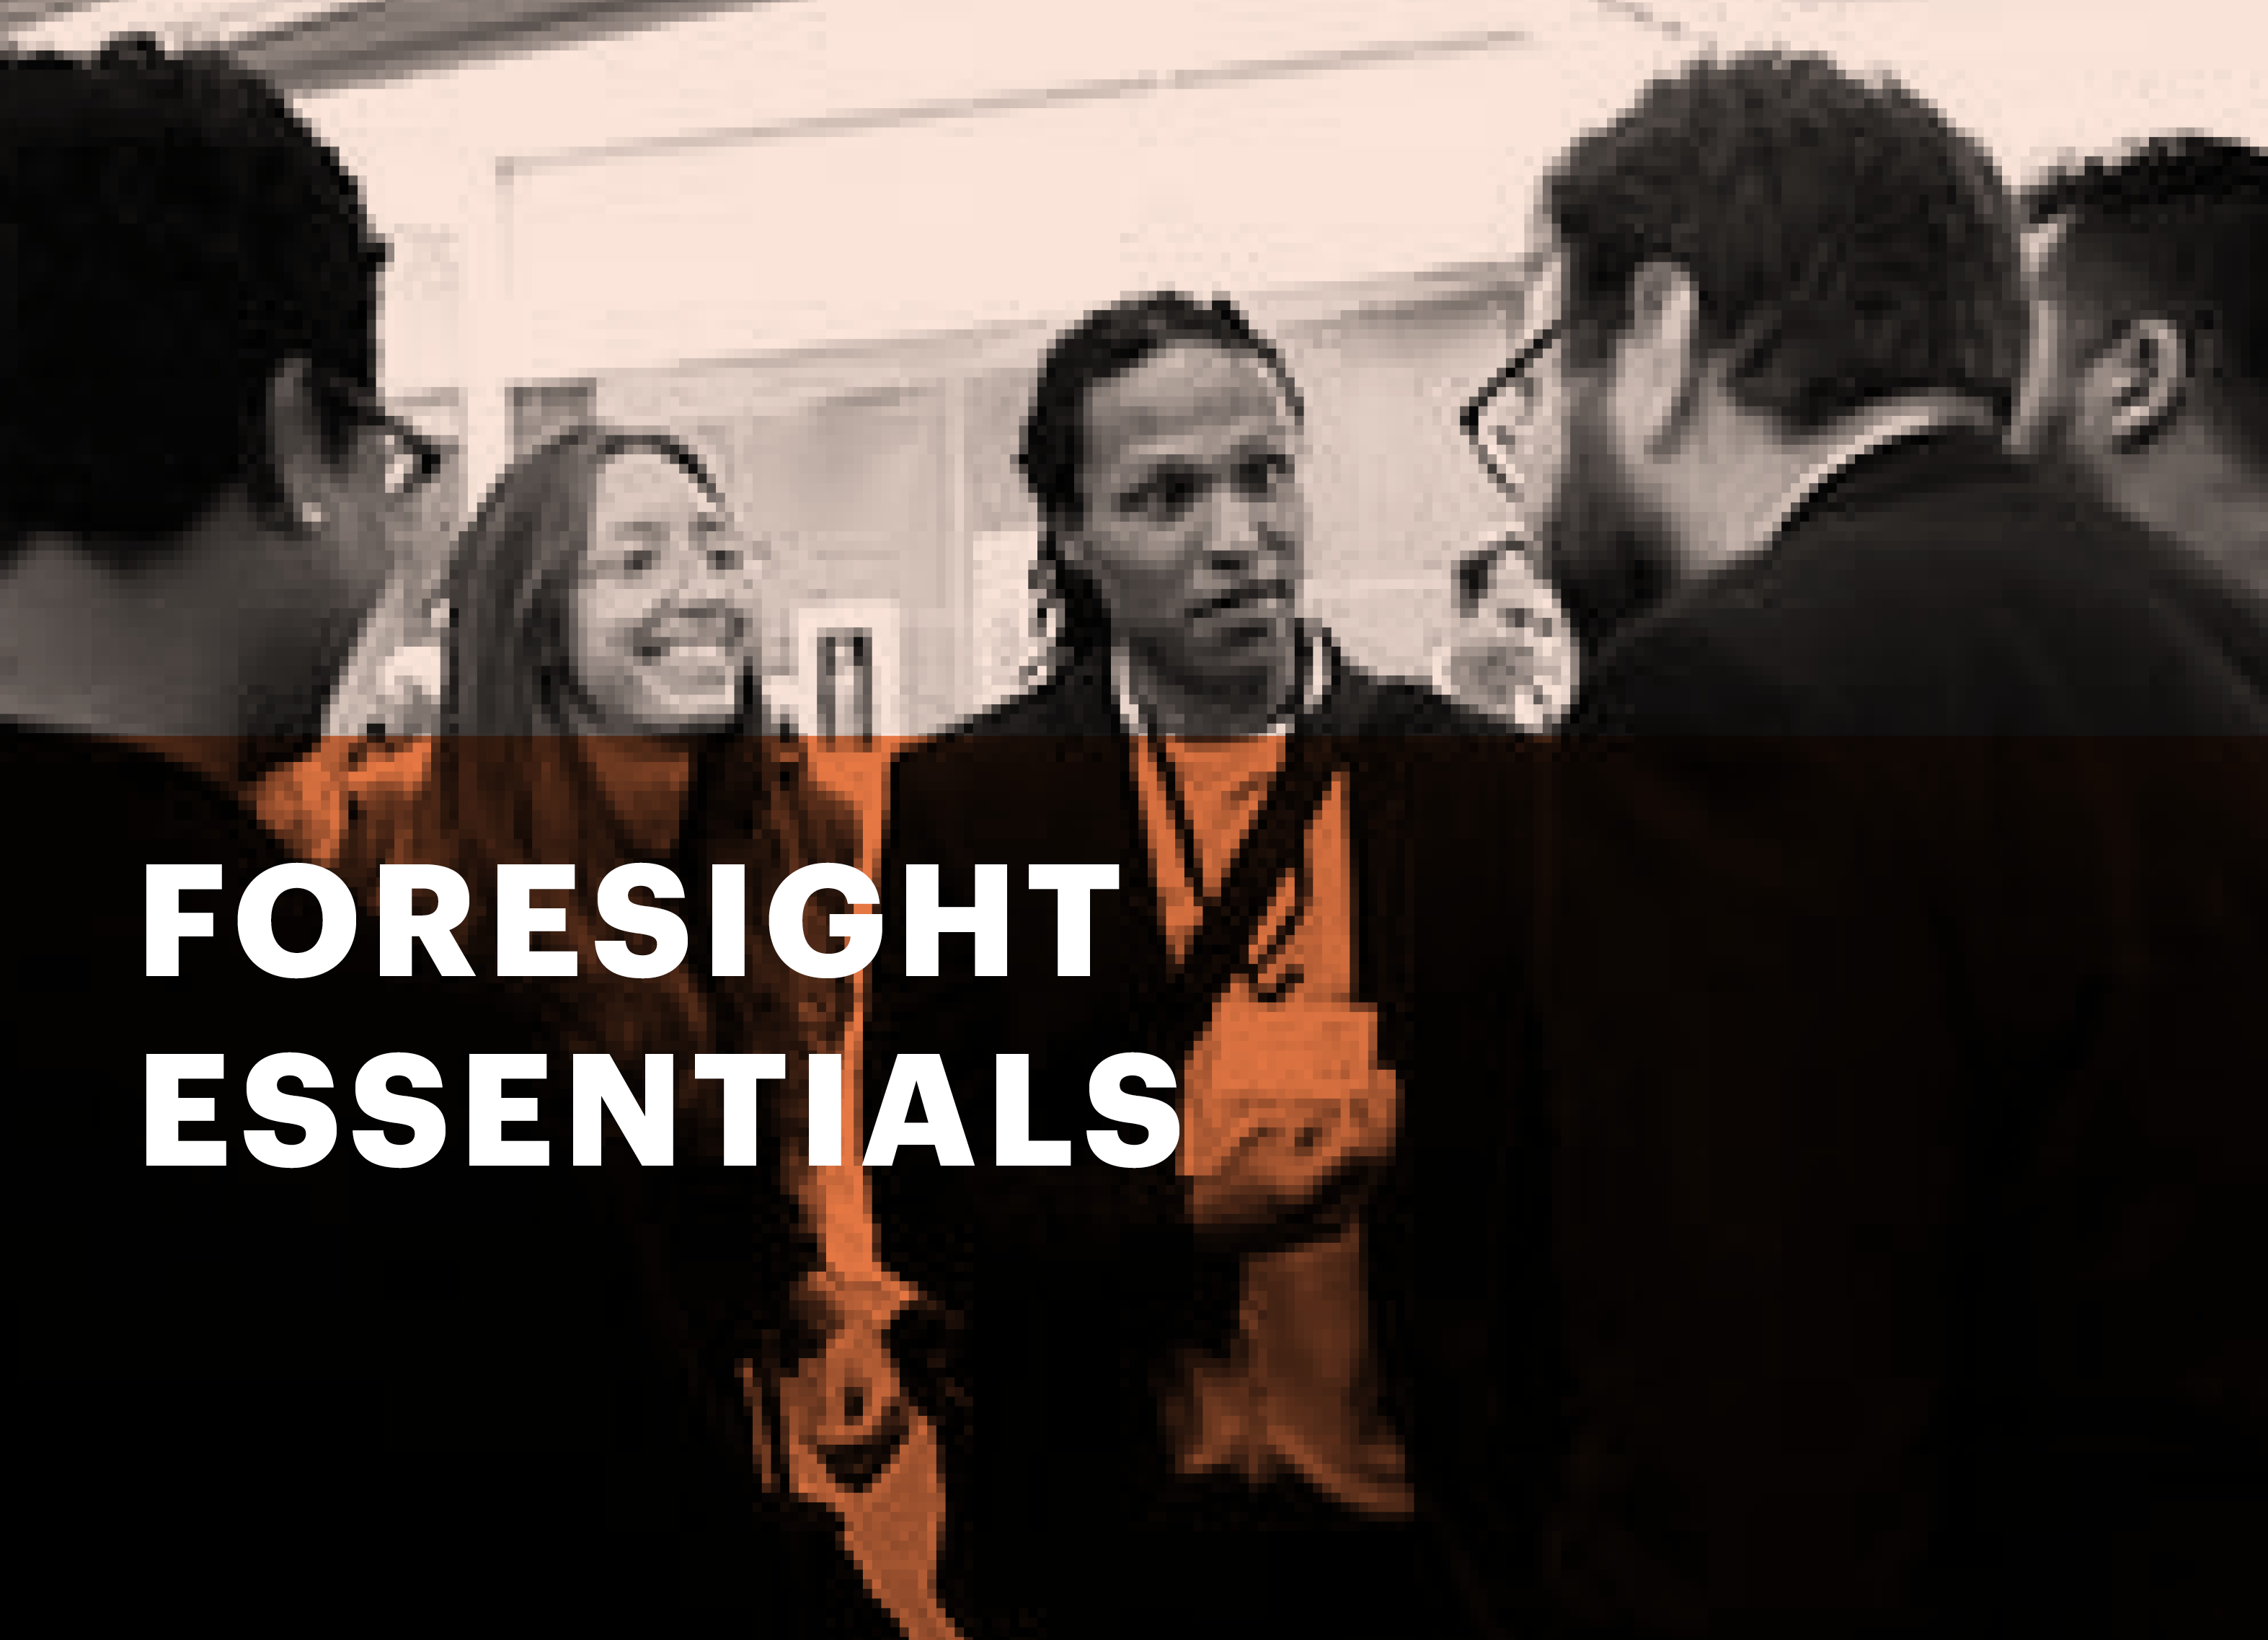 Foresight Essentials training for individuals